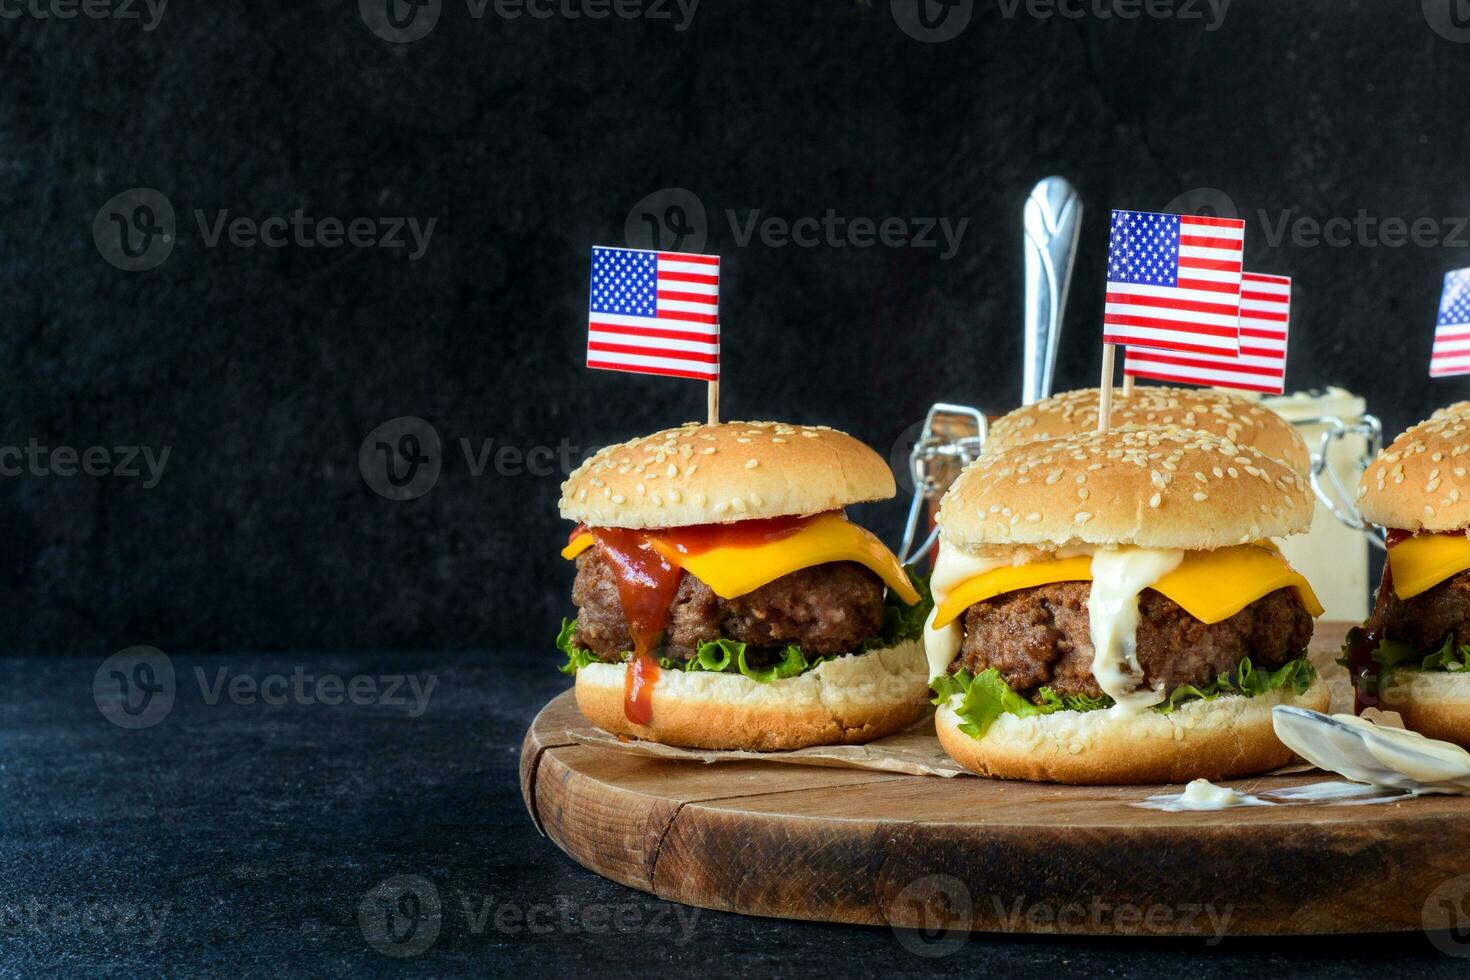 Mini american cheeseburgers photo